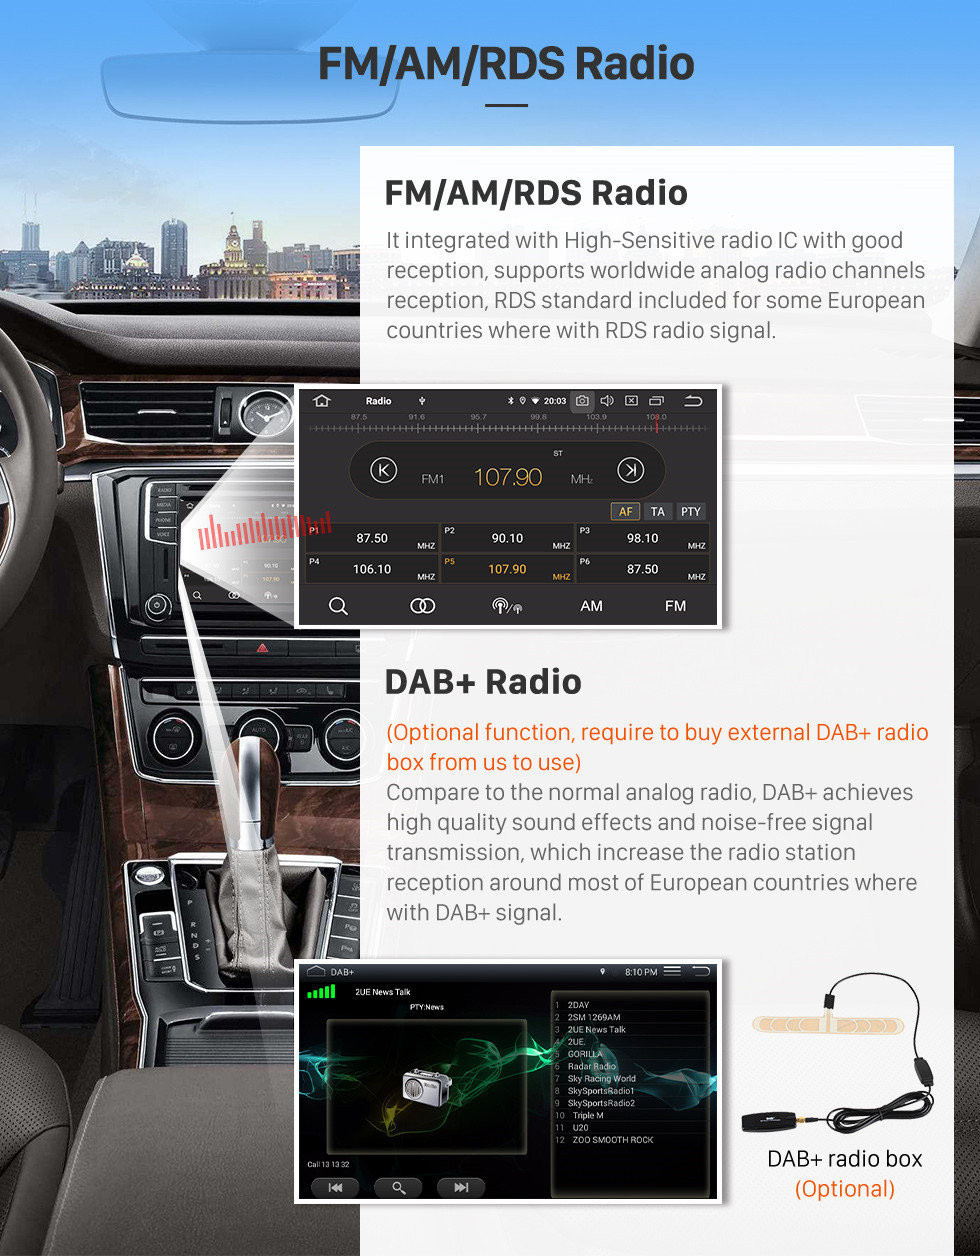 Seicane Android 13.0 10,1 Zoll 2012 Honda Civic (LHD) Radio GPS-Navigation Autoradio mit Bluetooth Digital TV Mirror Link OBD2 DVR Rückfahrkamera TPMS RDS Lenkradsteuerung